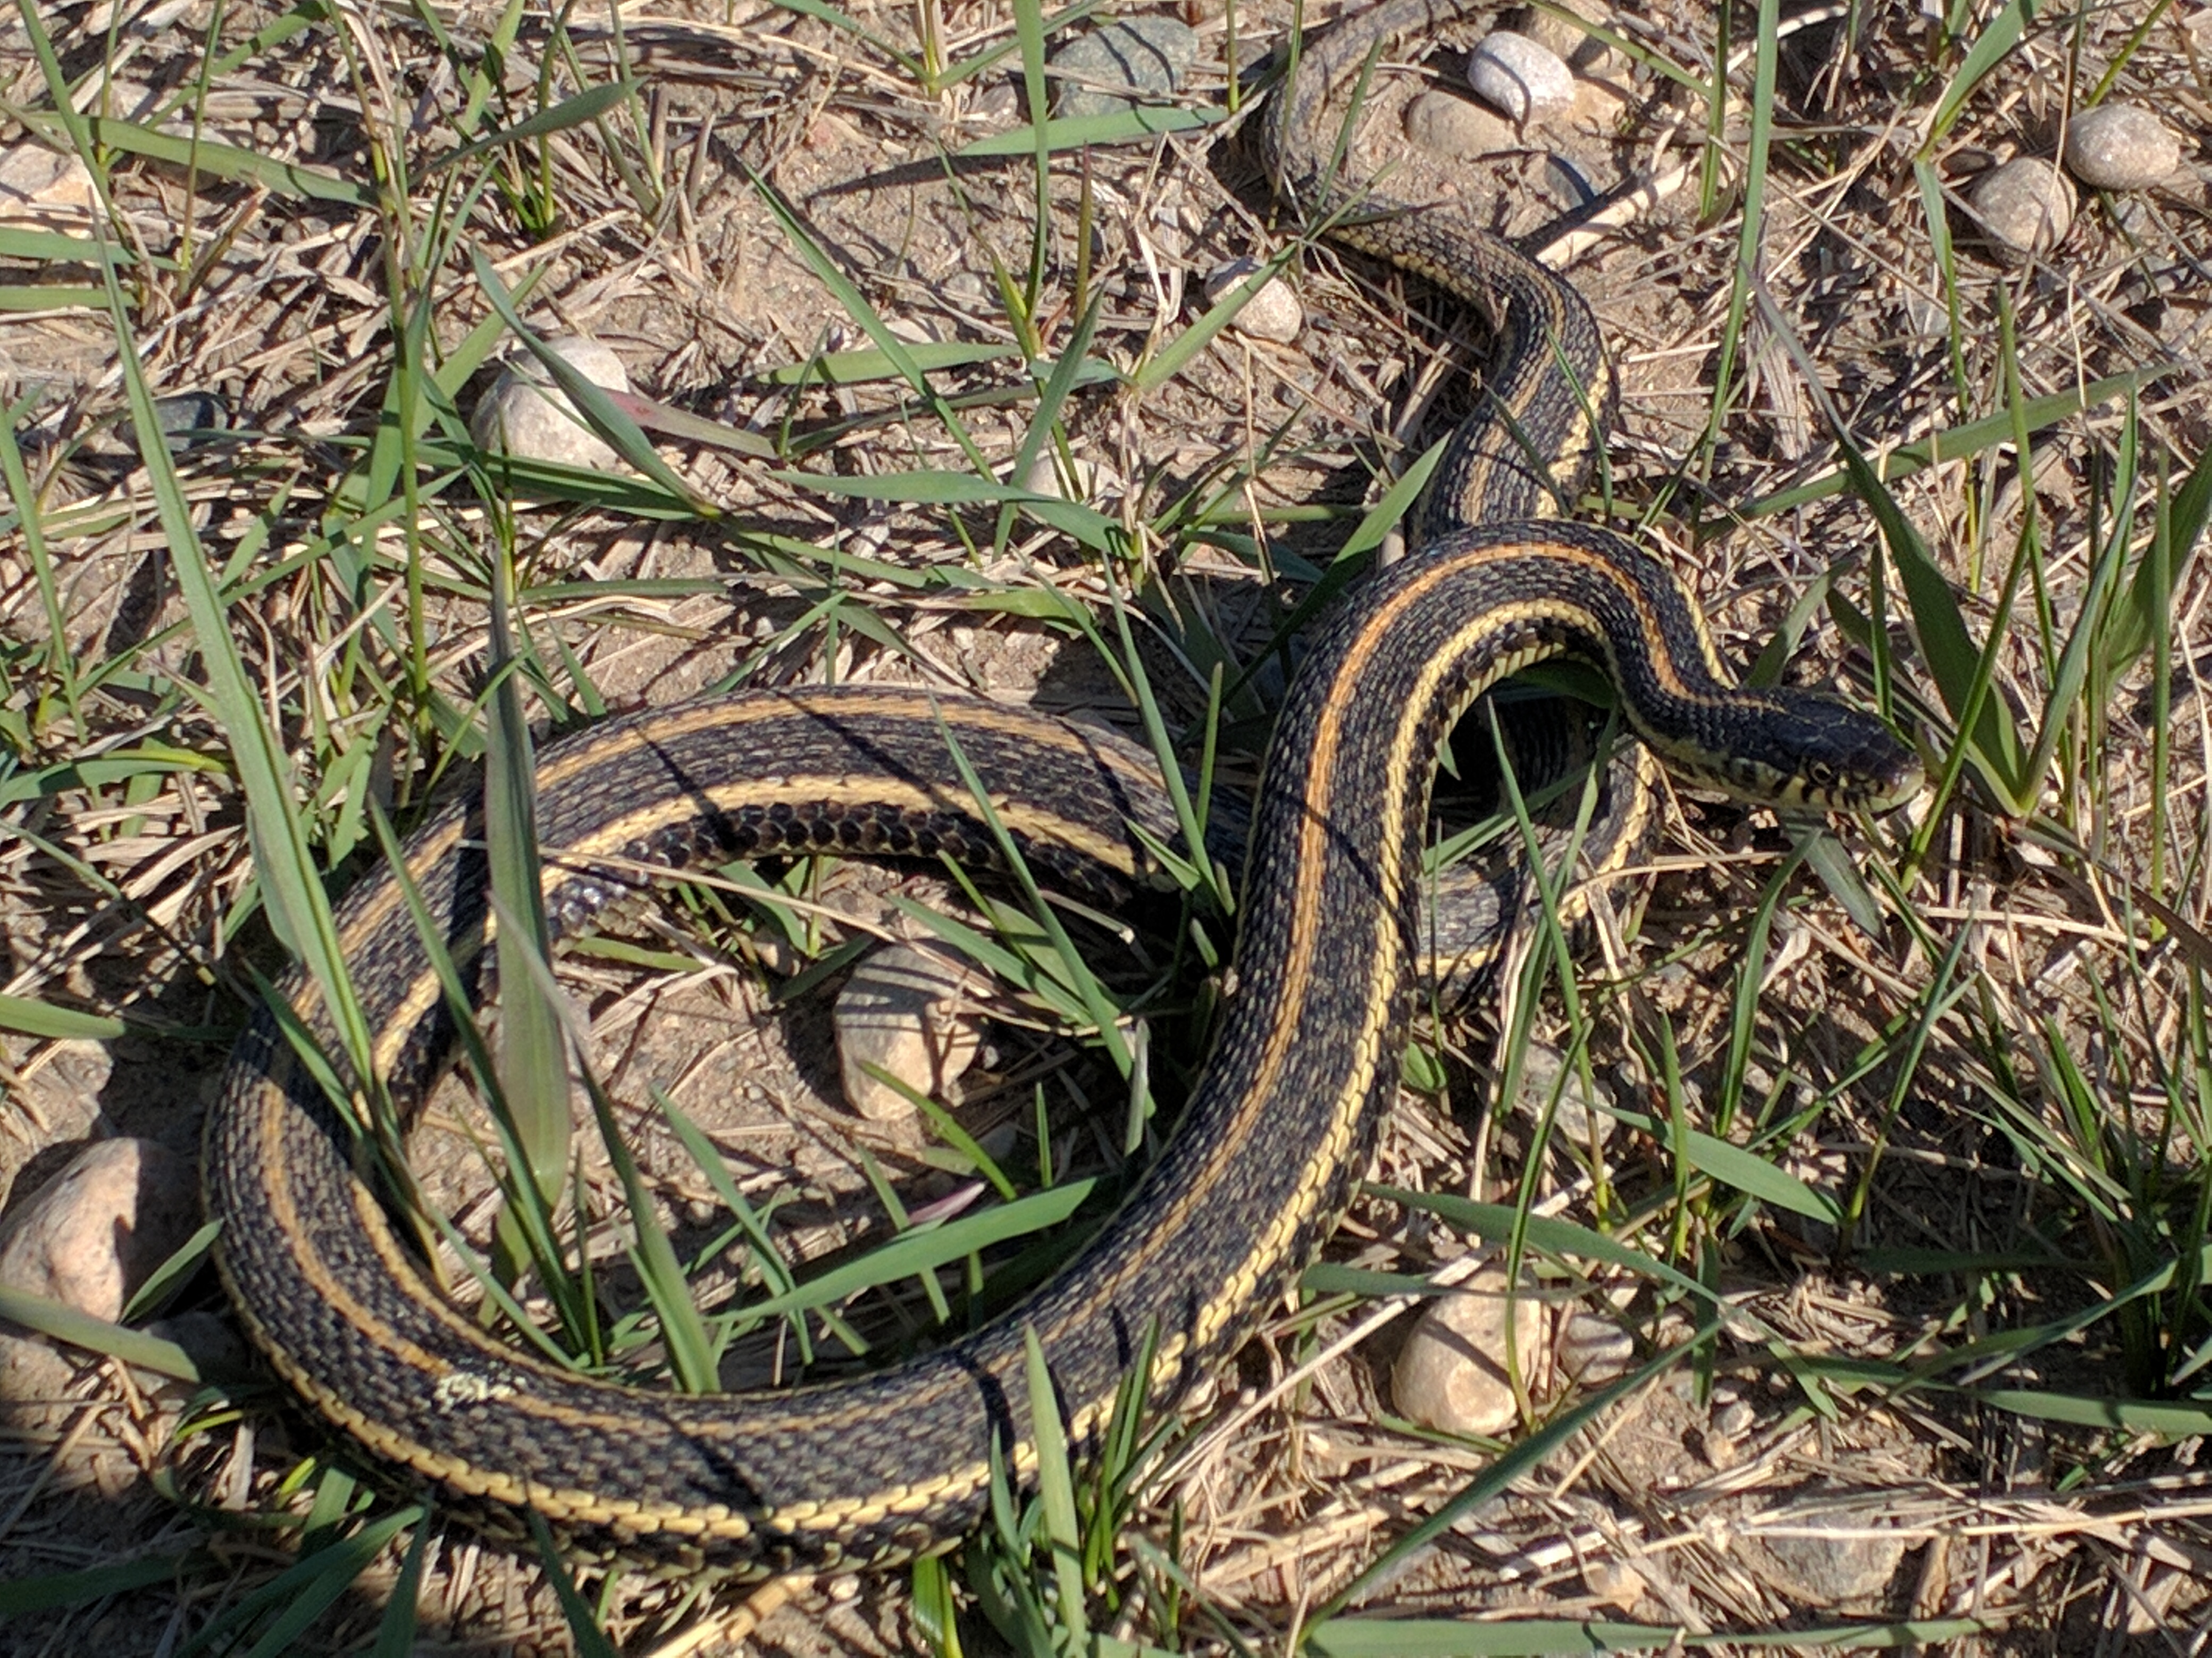 File:Plains Garter Snake - Flickr - GregTheBusker.jpg - Wikimedia ...